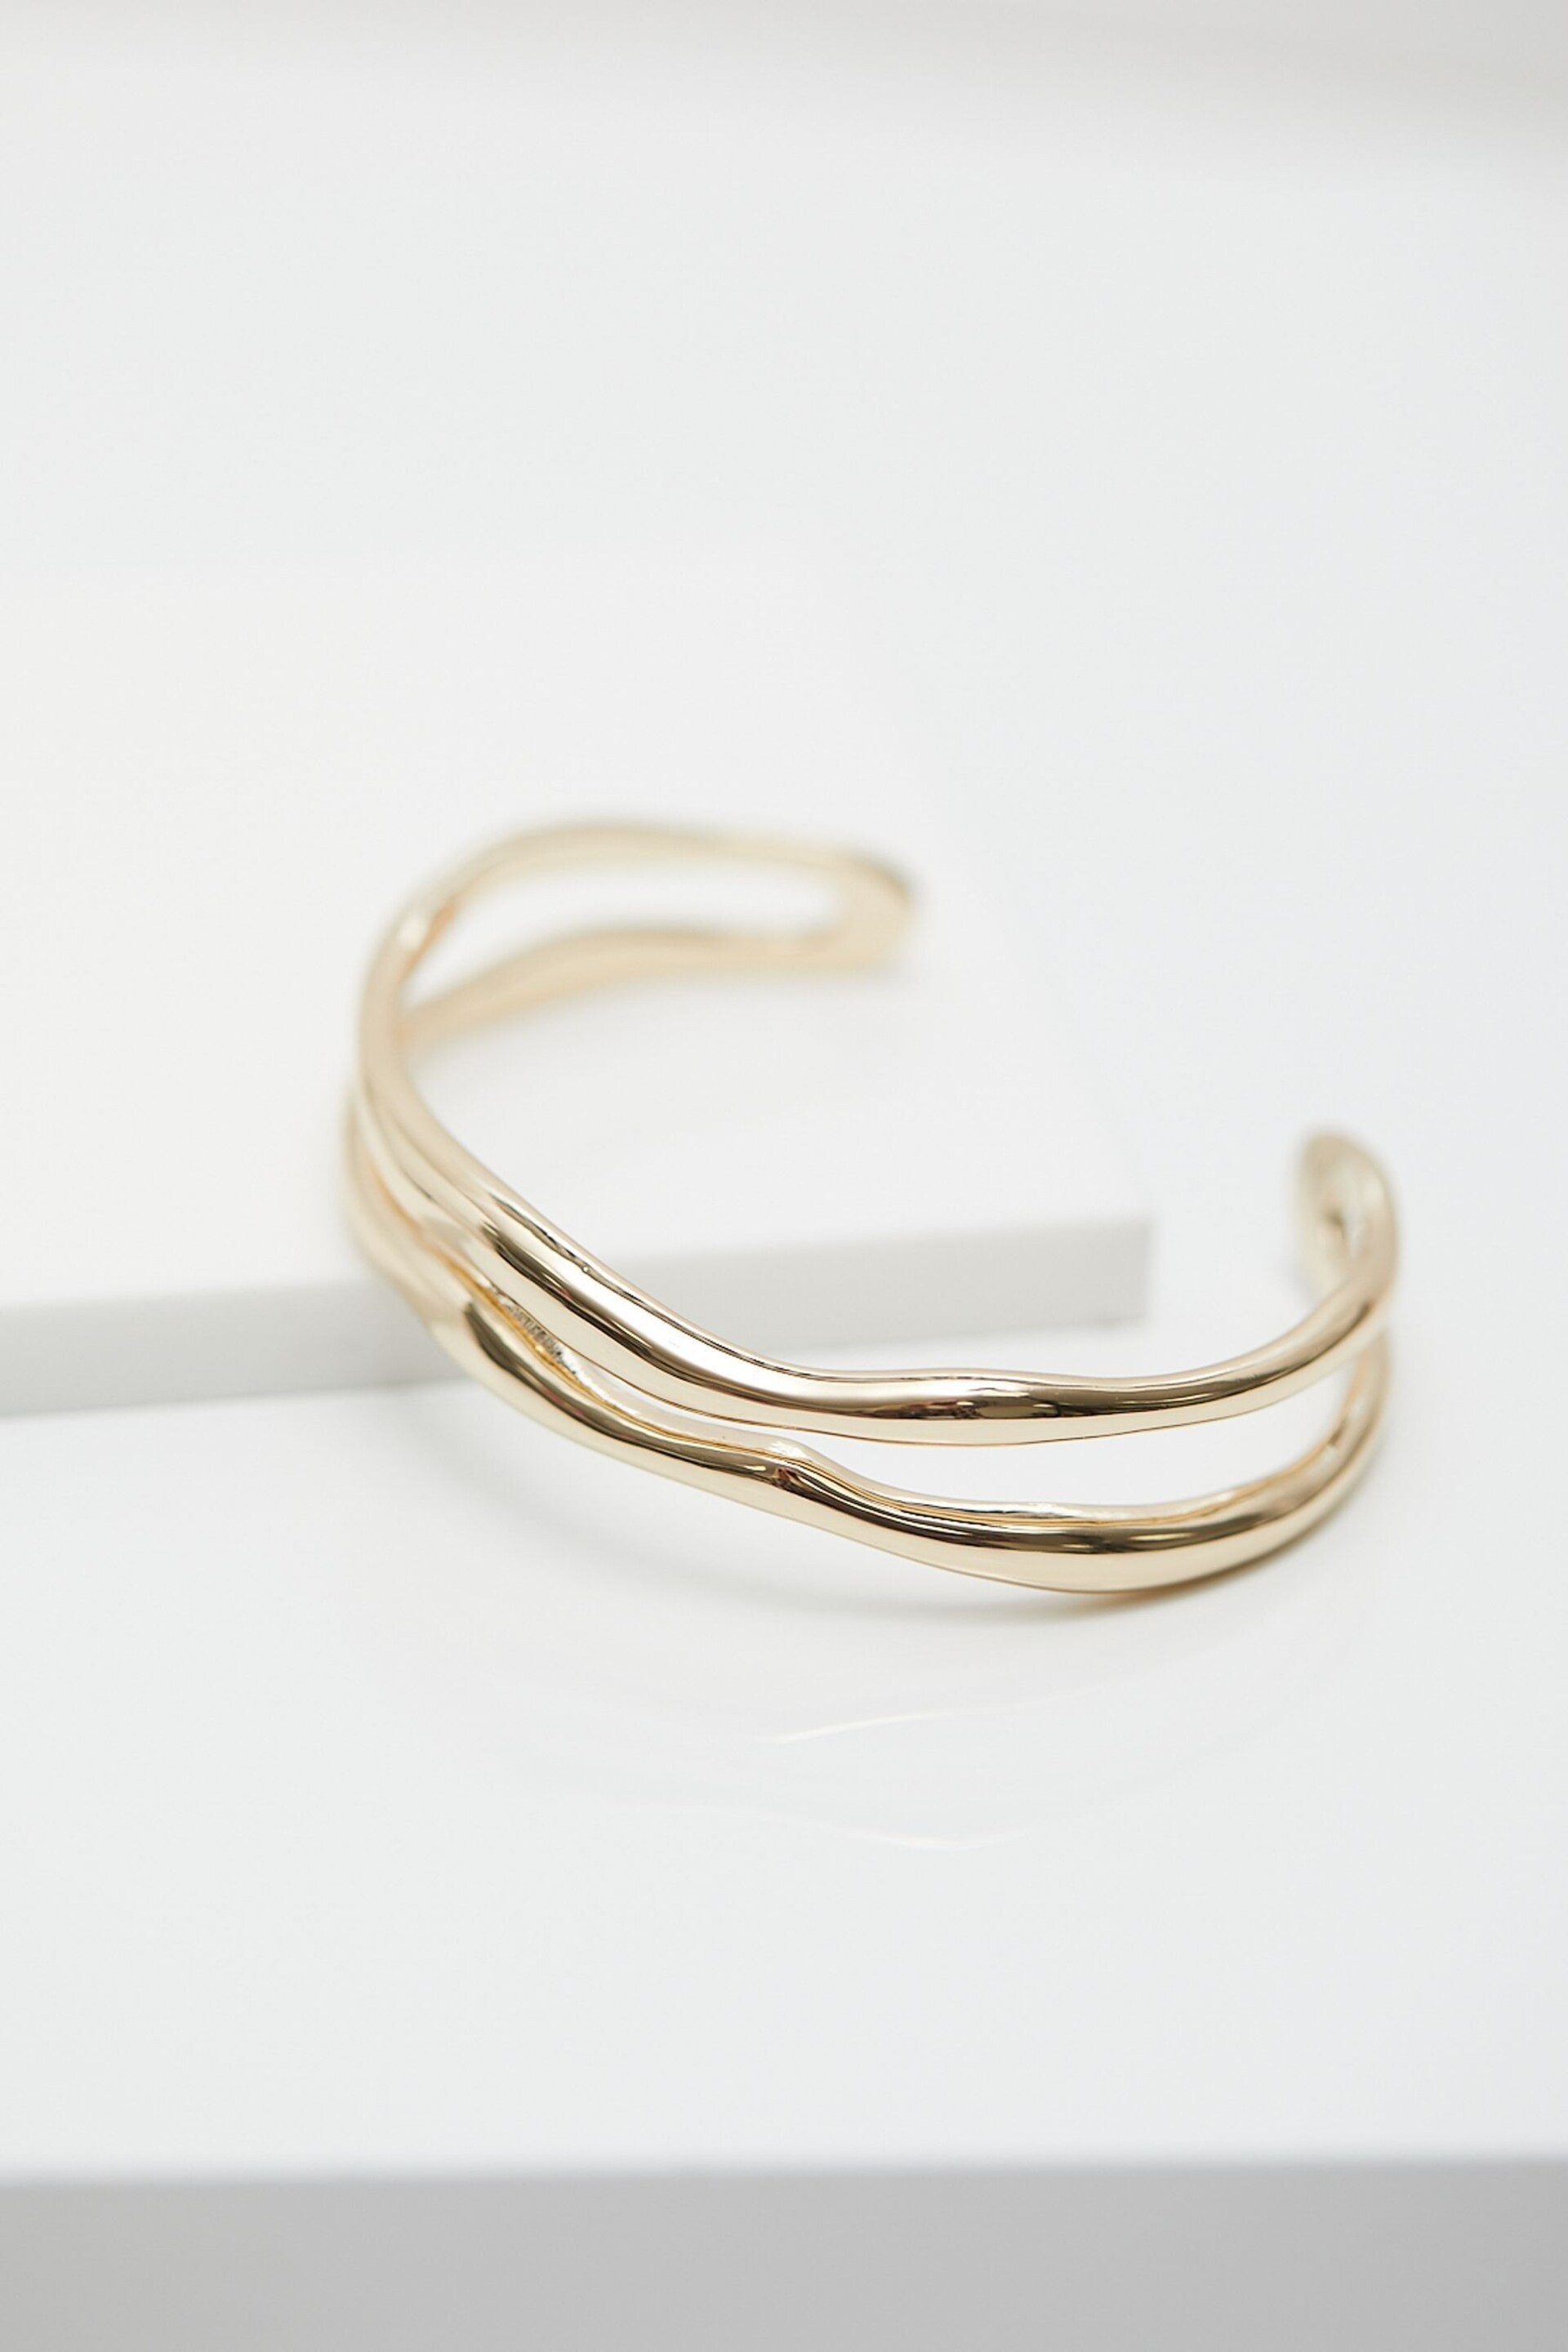 Jon Richard Gold Tone Double Cuff Bracelet - Image 3 of 3